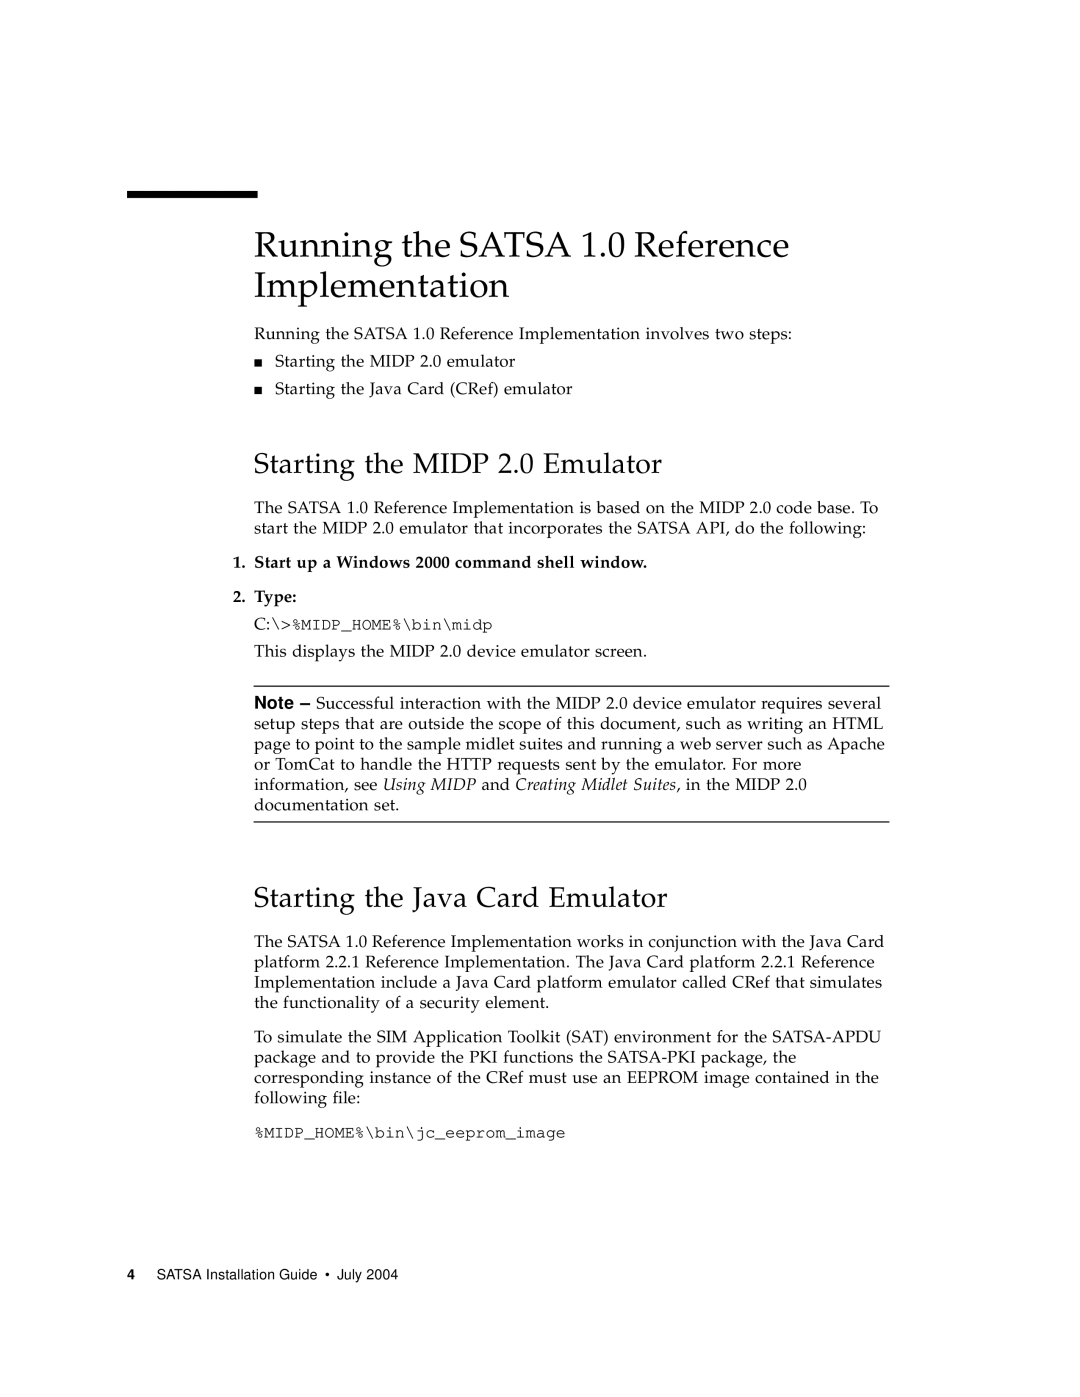 Sun Microsystems manual Running the SATSA 1.0 Reference Implementation, Starting the MIDP 2.0 Emulator 